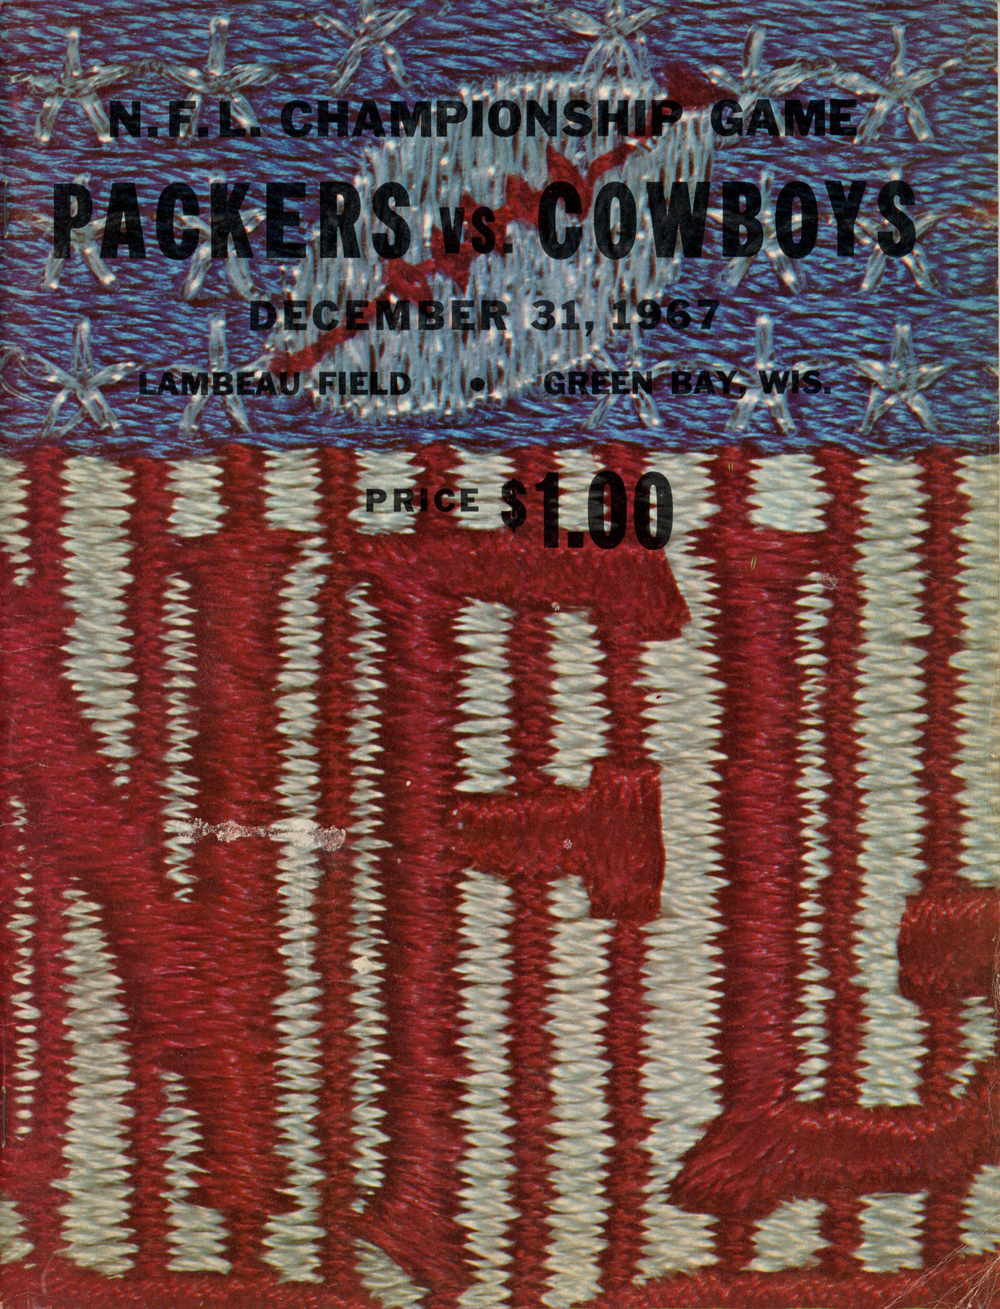 1967 NFL Championship Game Program Ice Bowl Packers vs Cowboys